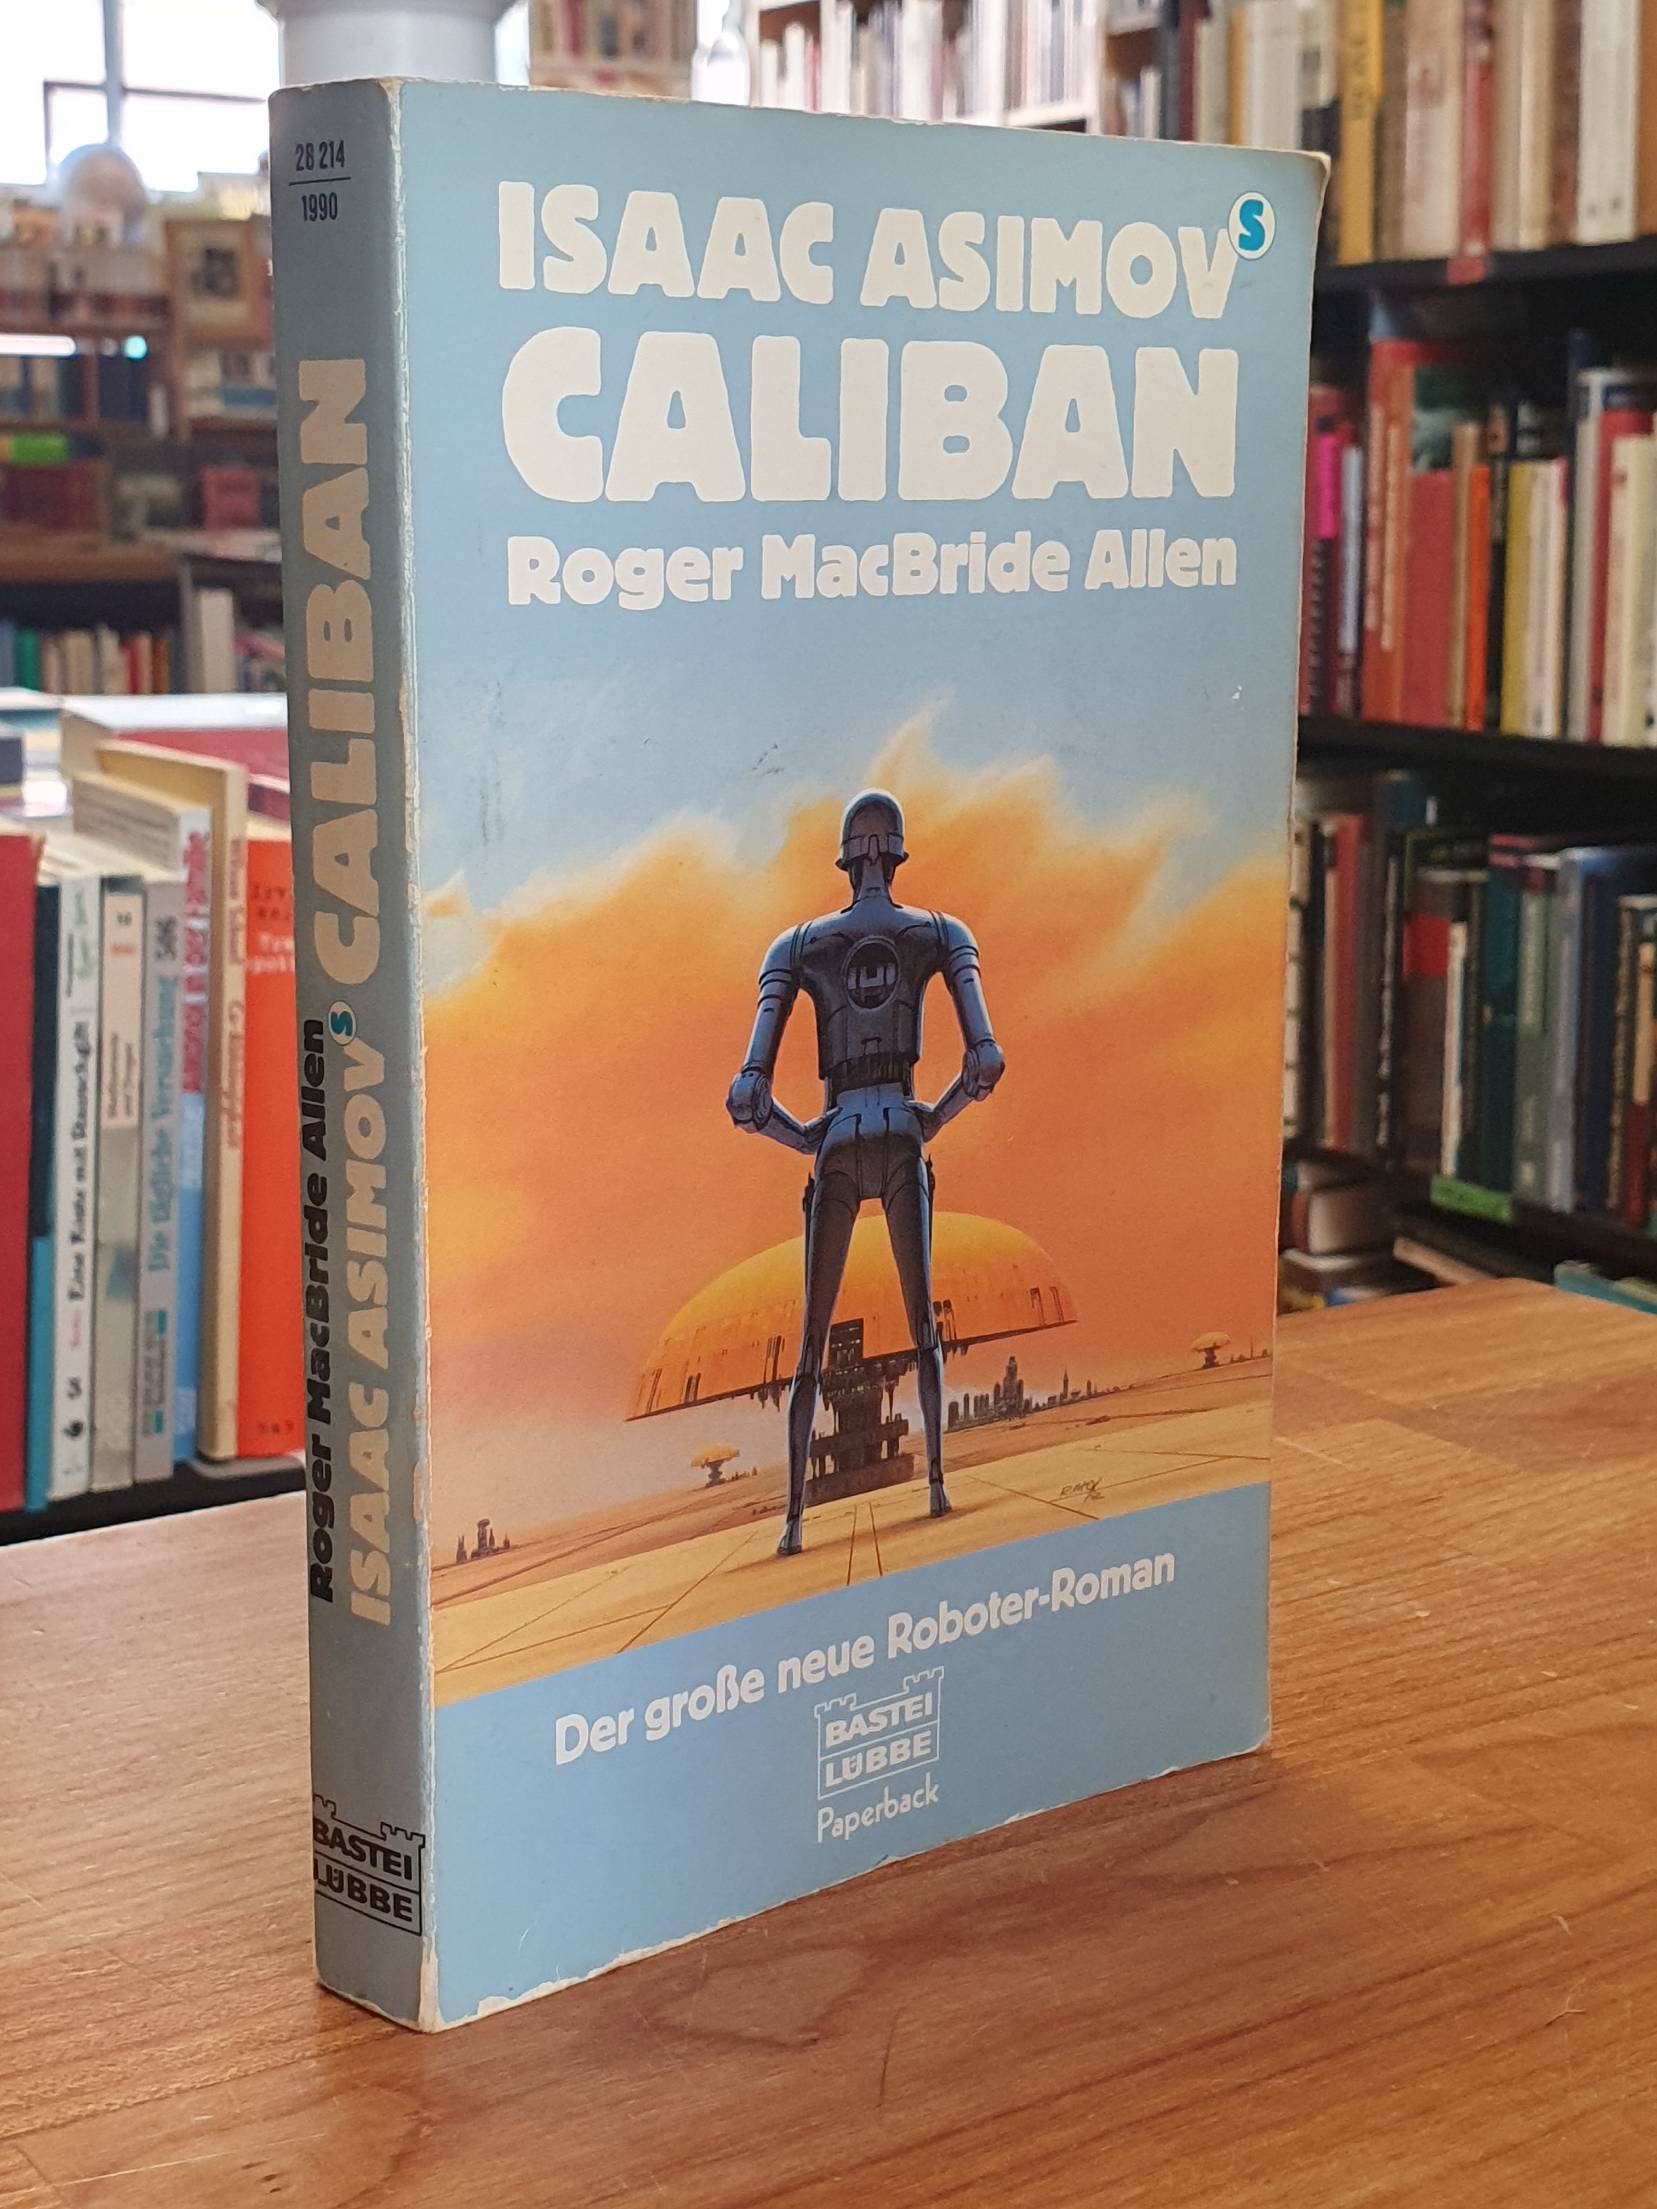 Allen, Isaac Asimovs Caliban – Der grosse neue Roboter-Roman,